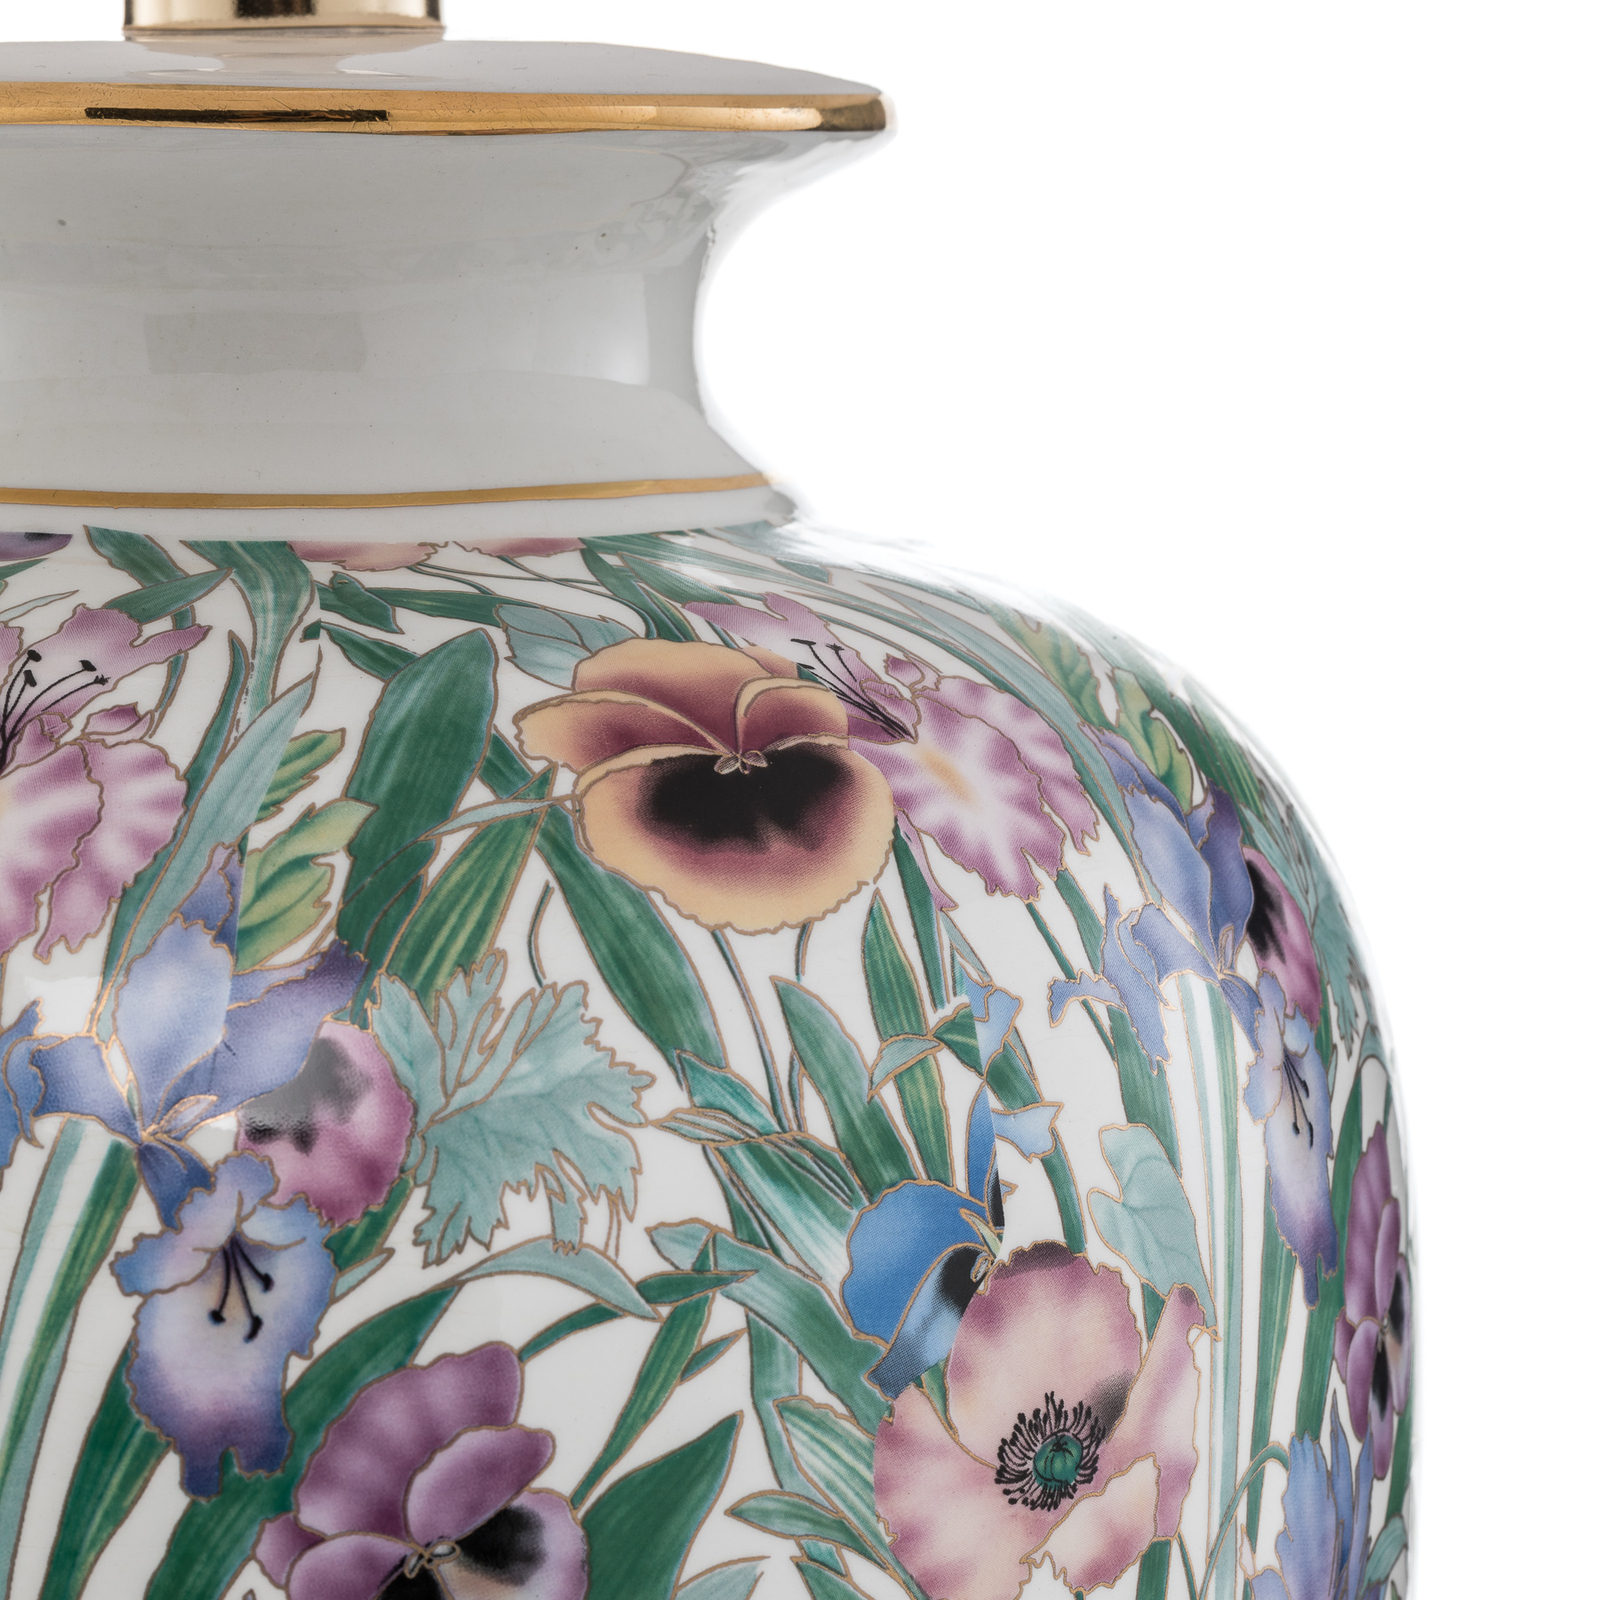 KOLARZ Giardino Panse - floral bordlampe 50 cm